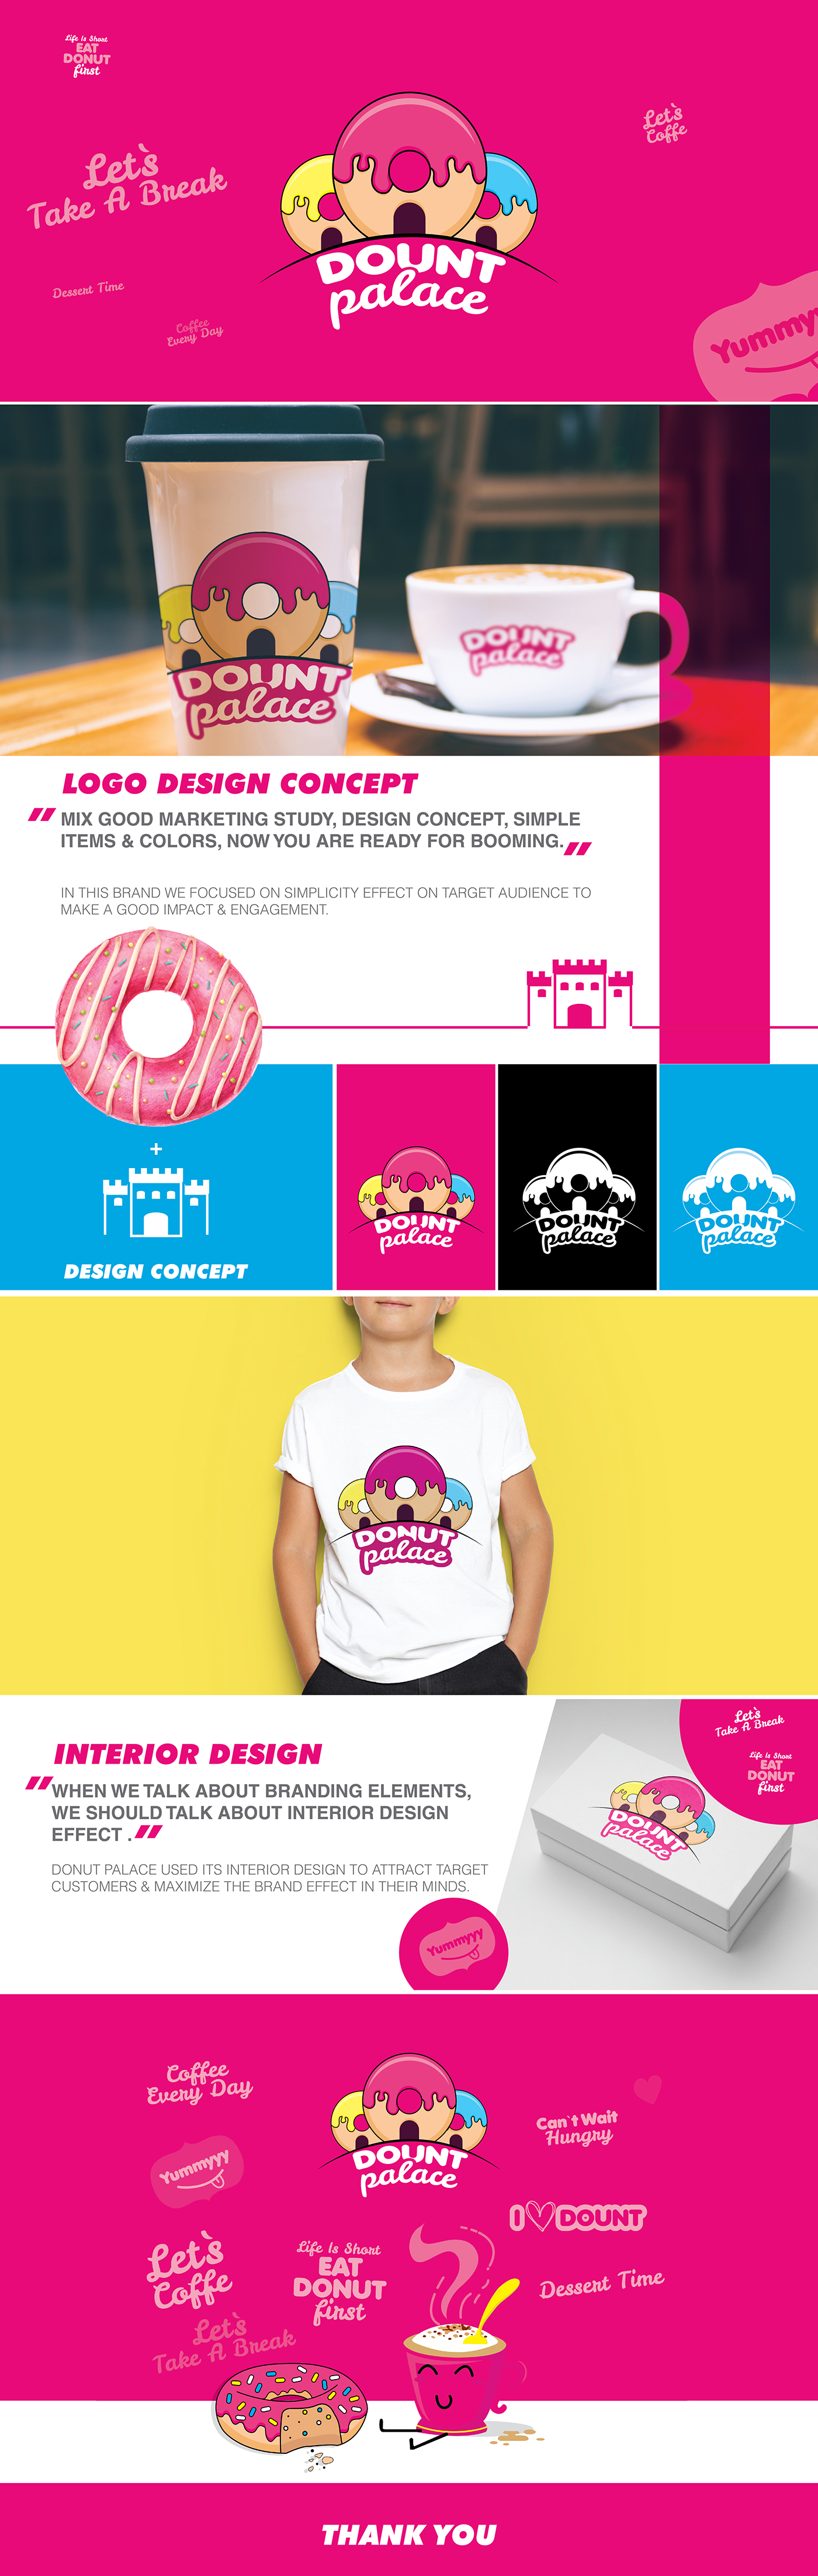 gtopia marketing   Promotion Campaign branding  visual identity Logo Design prints donut interior design  alexandria